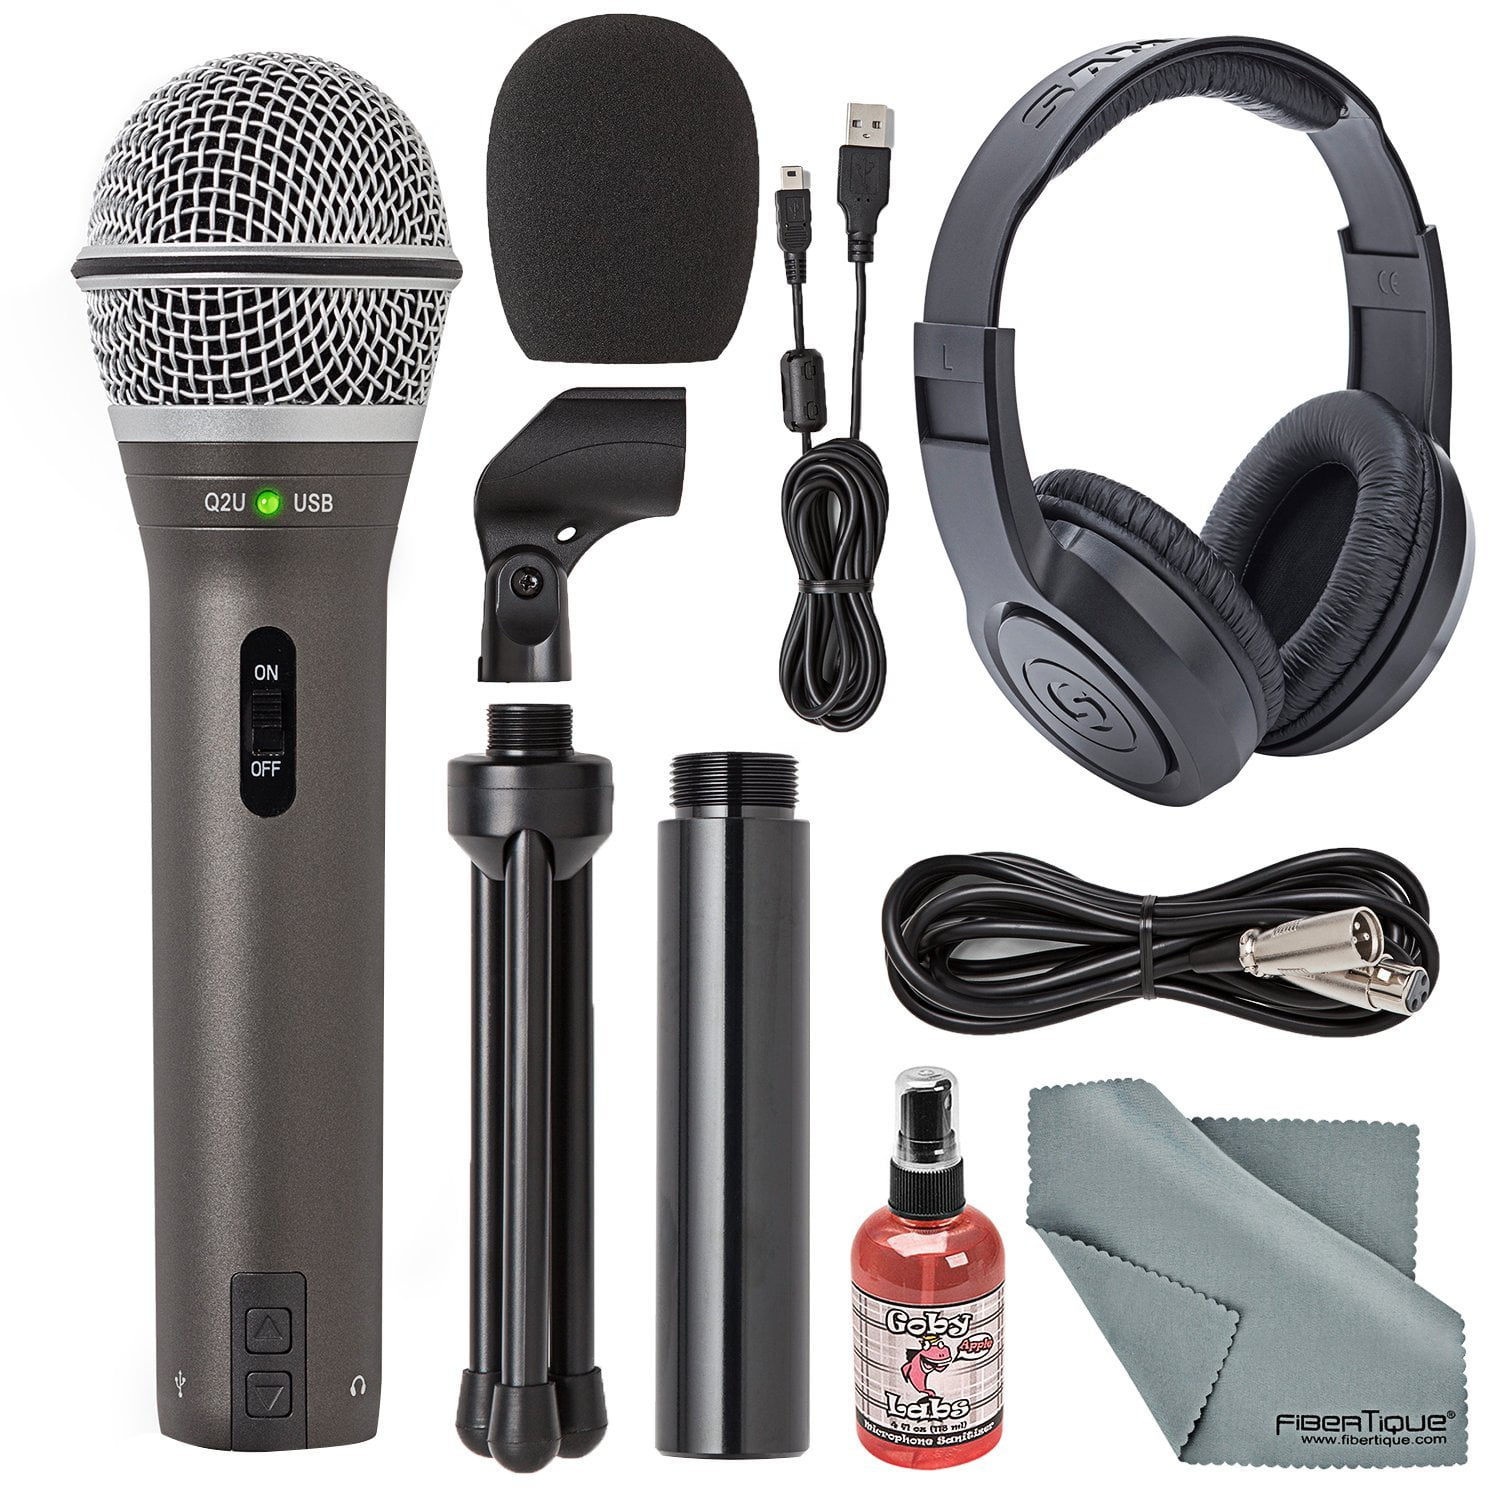 Samson Q2U Dynamic USB Microphone Podcasting Pack and Accessory Bundle with Boom Arm Fibertique Cloth Headphones Pop Filter 